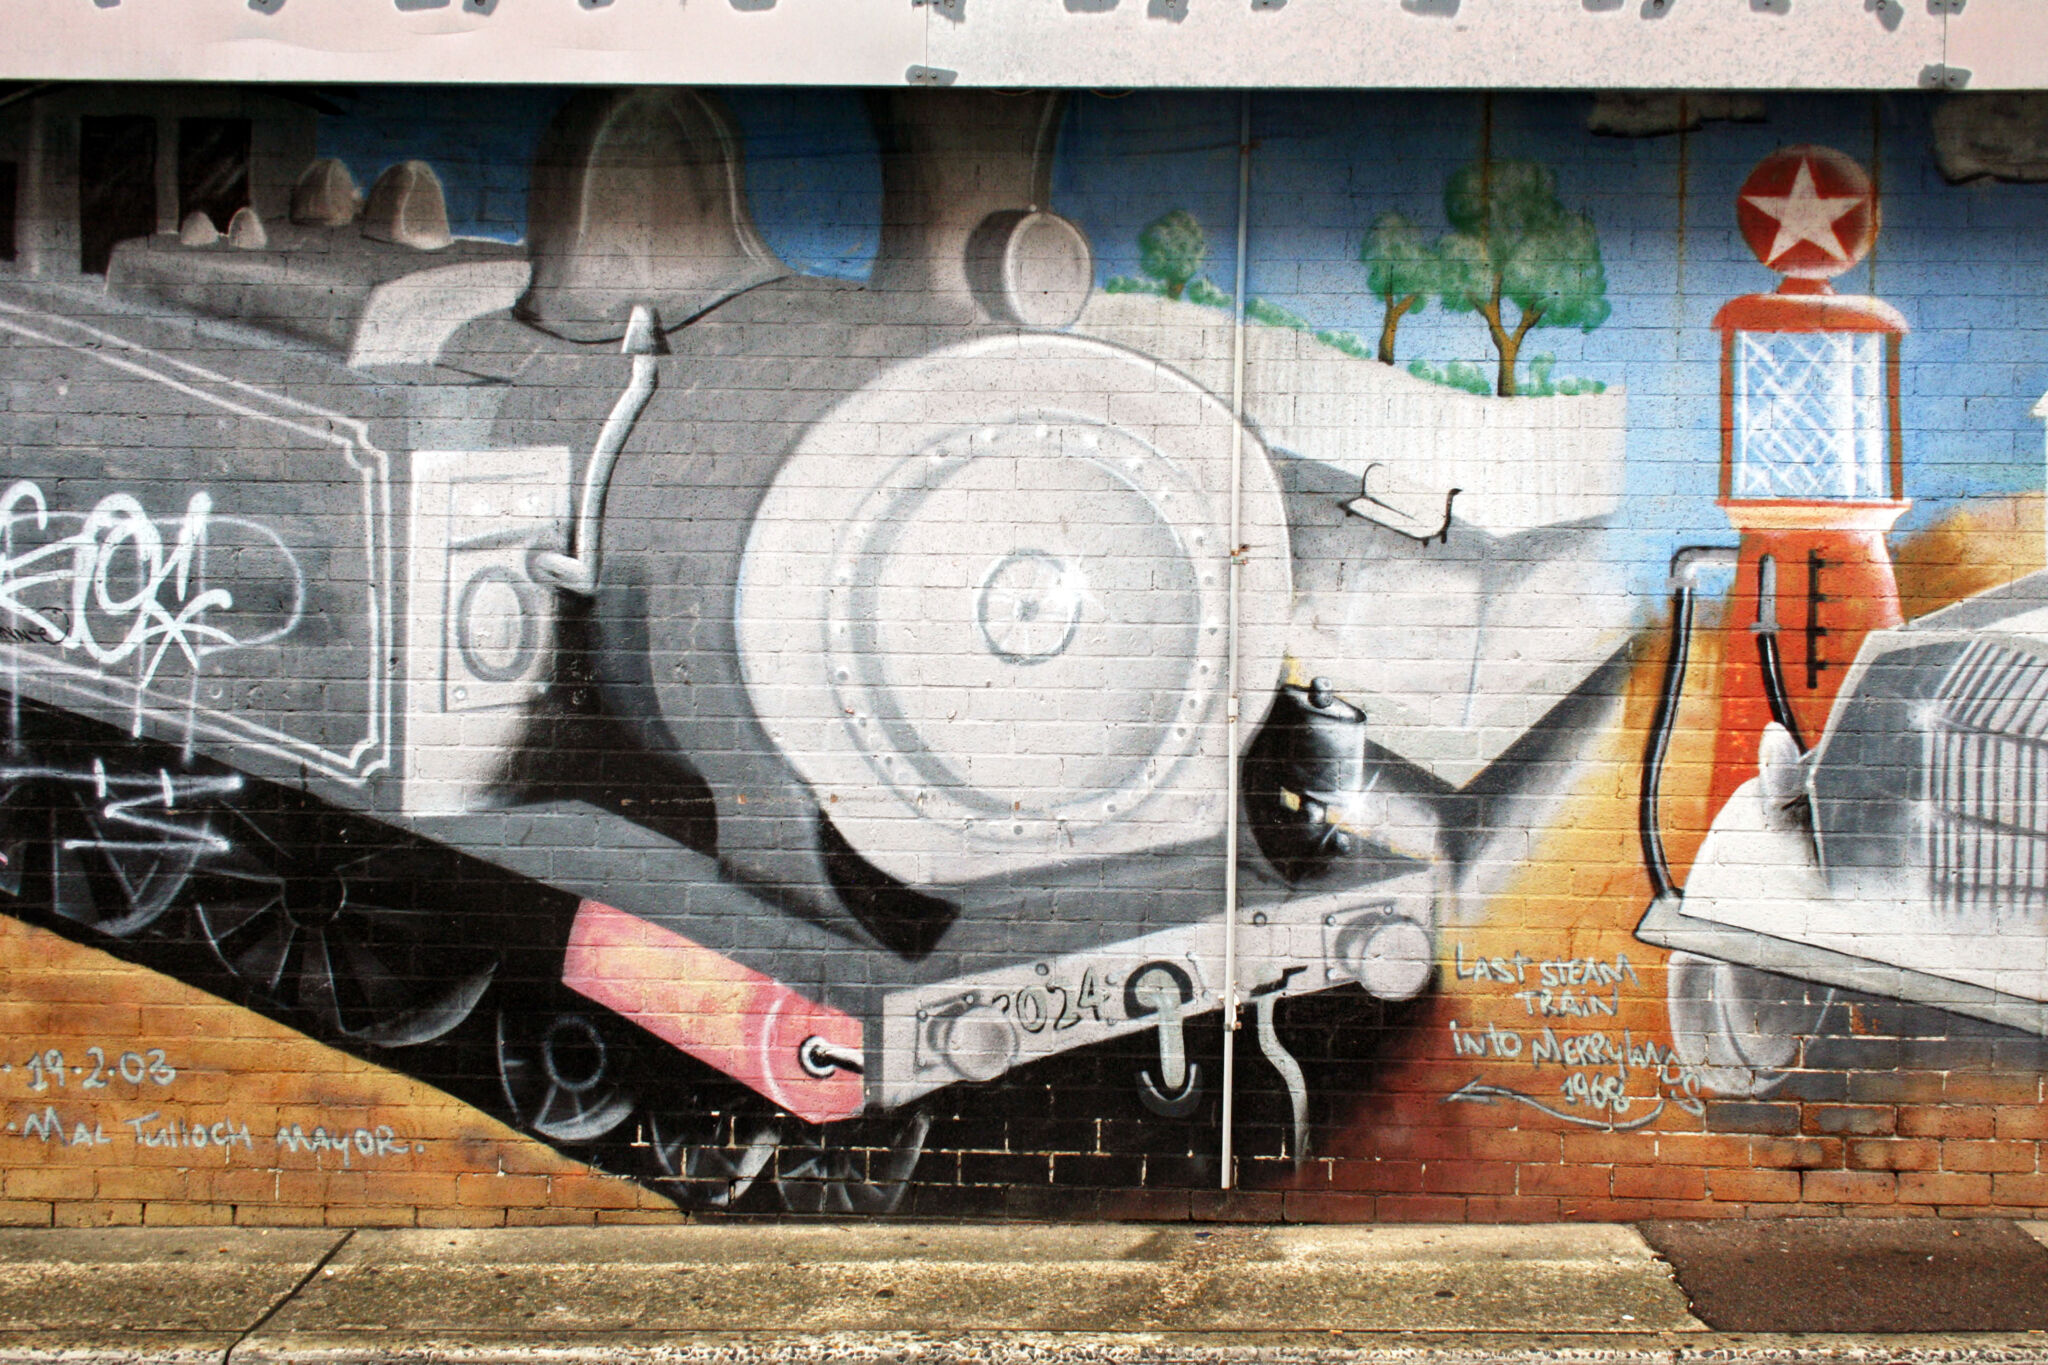 Tony Moston&mdash;Holroyd Historical Mural